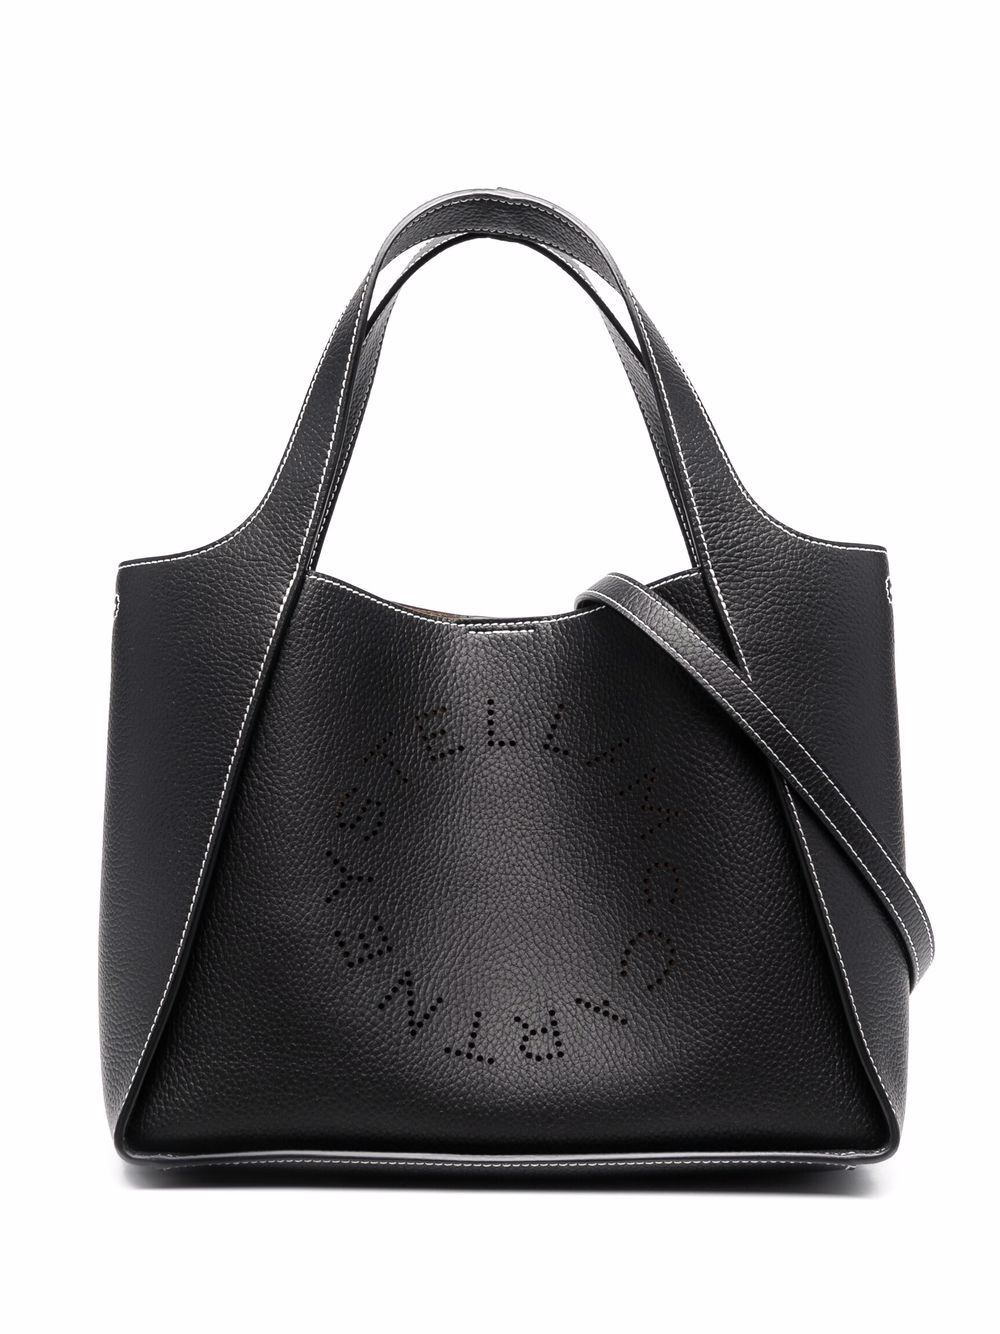 Stella McCartney Stella Logo tote bag - Black